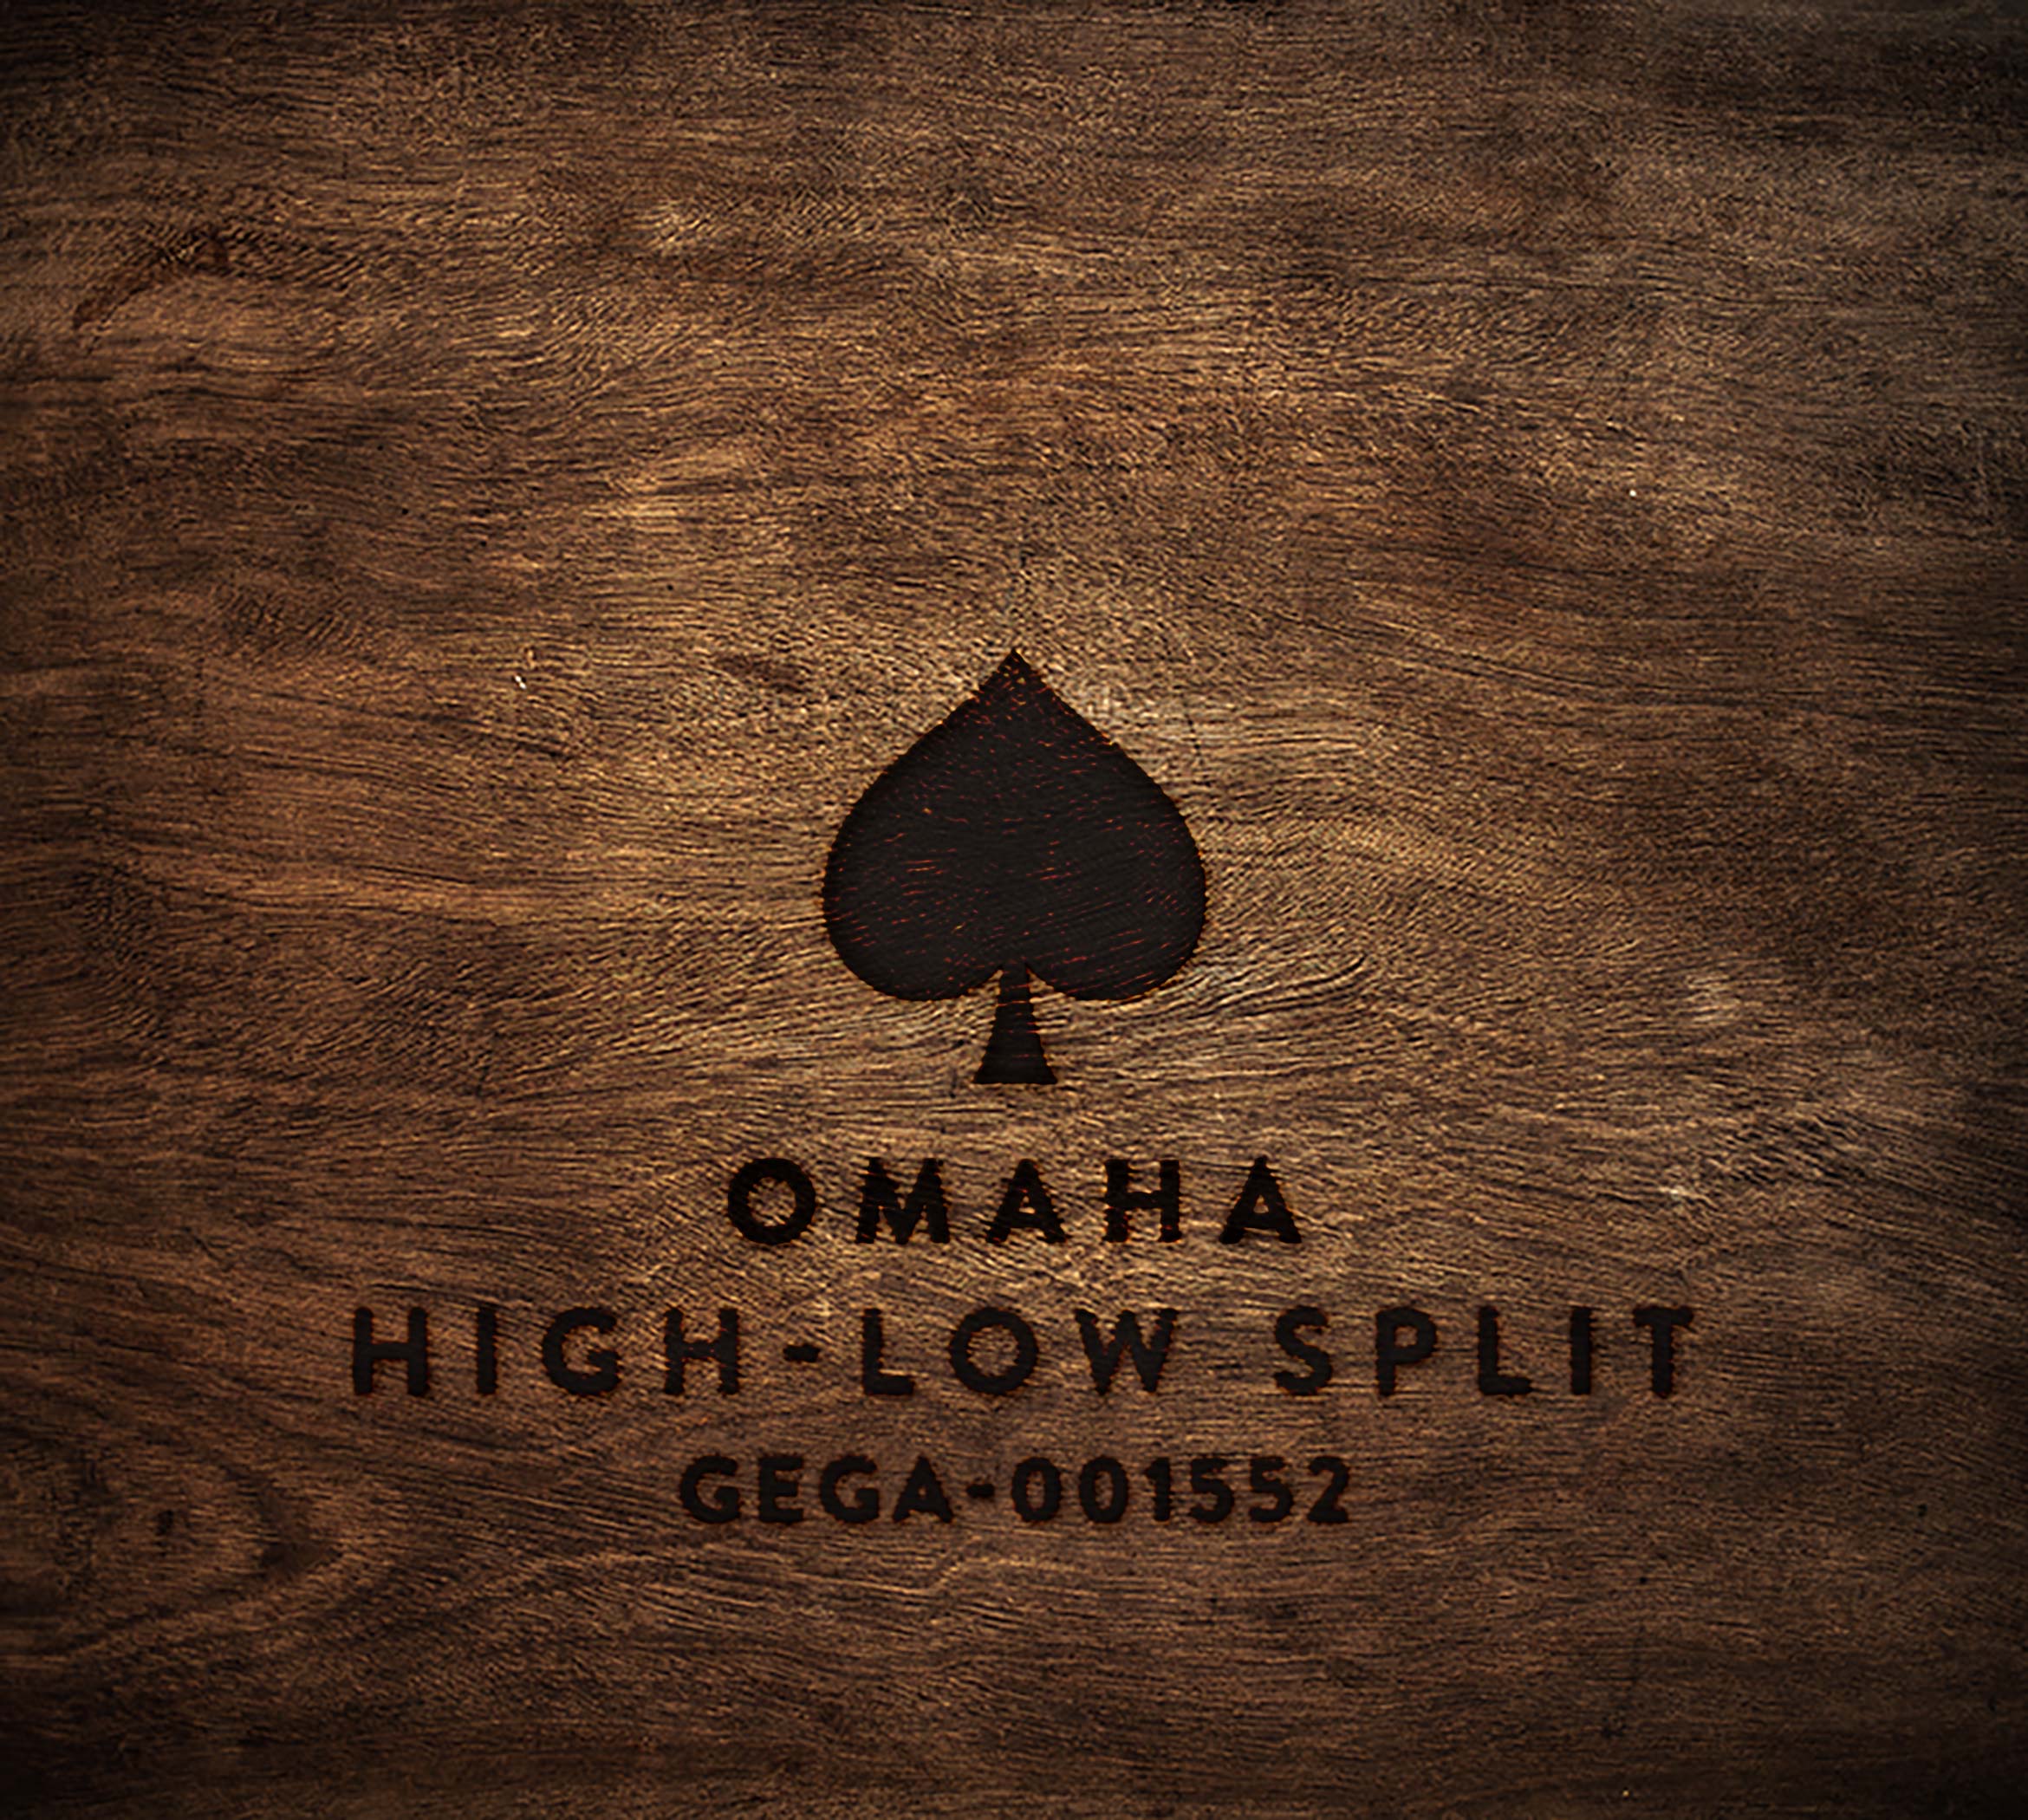 Omaha High-Low Split GEGA-001552 wood square